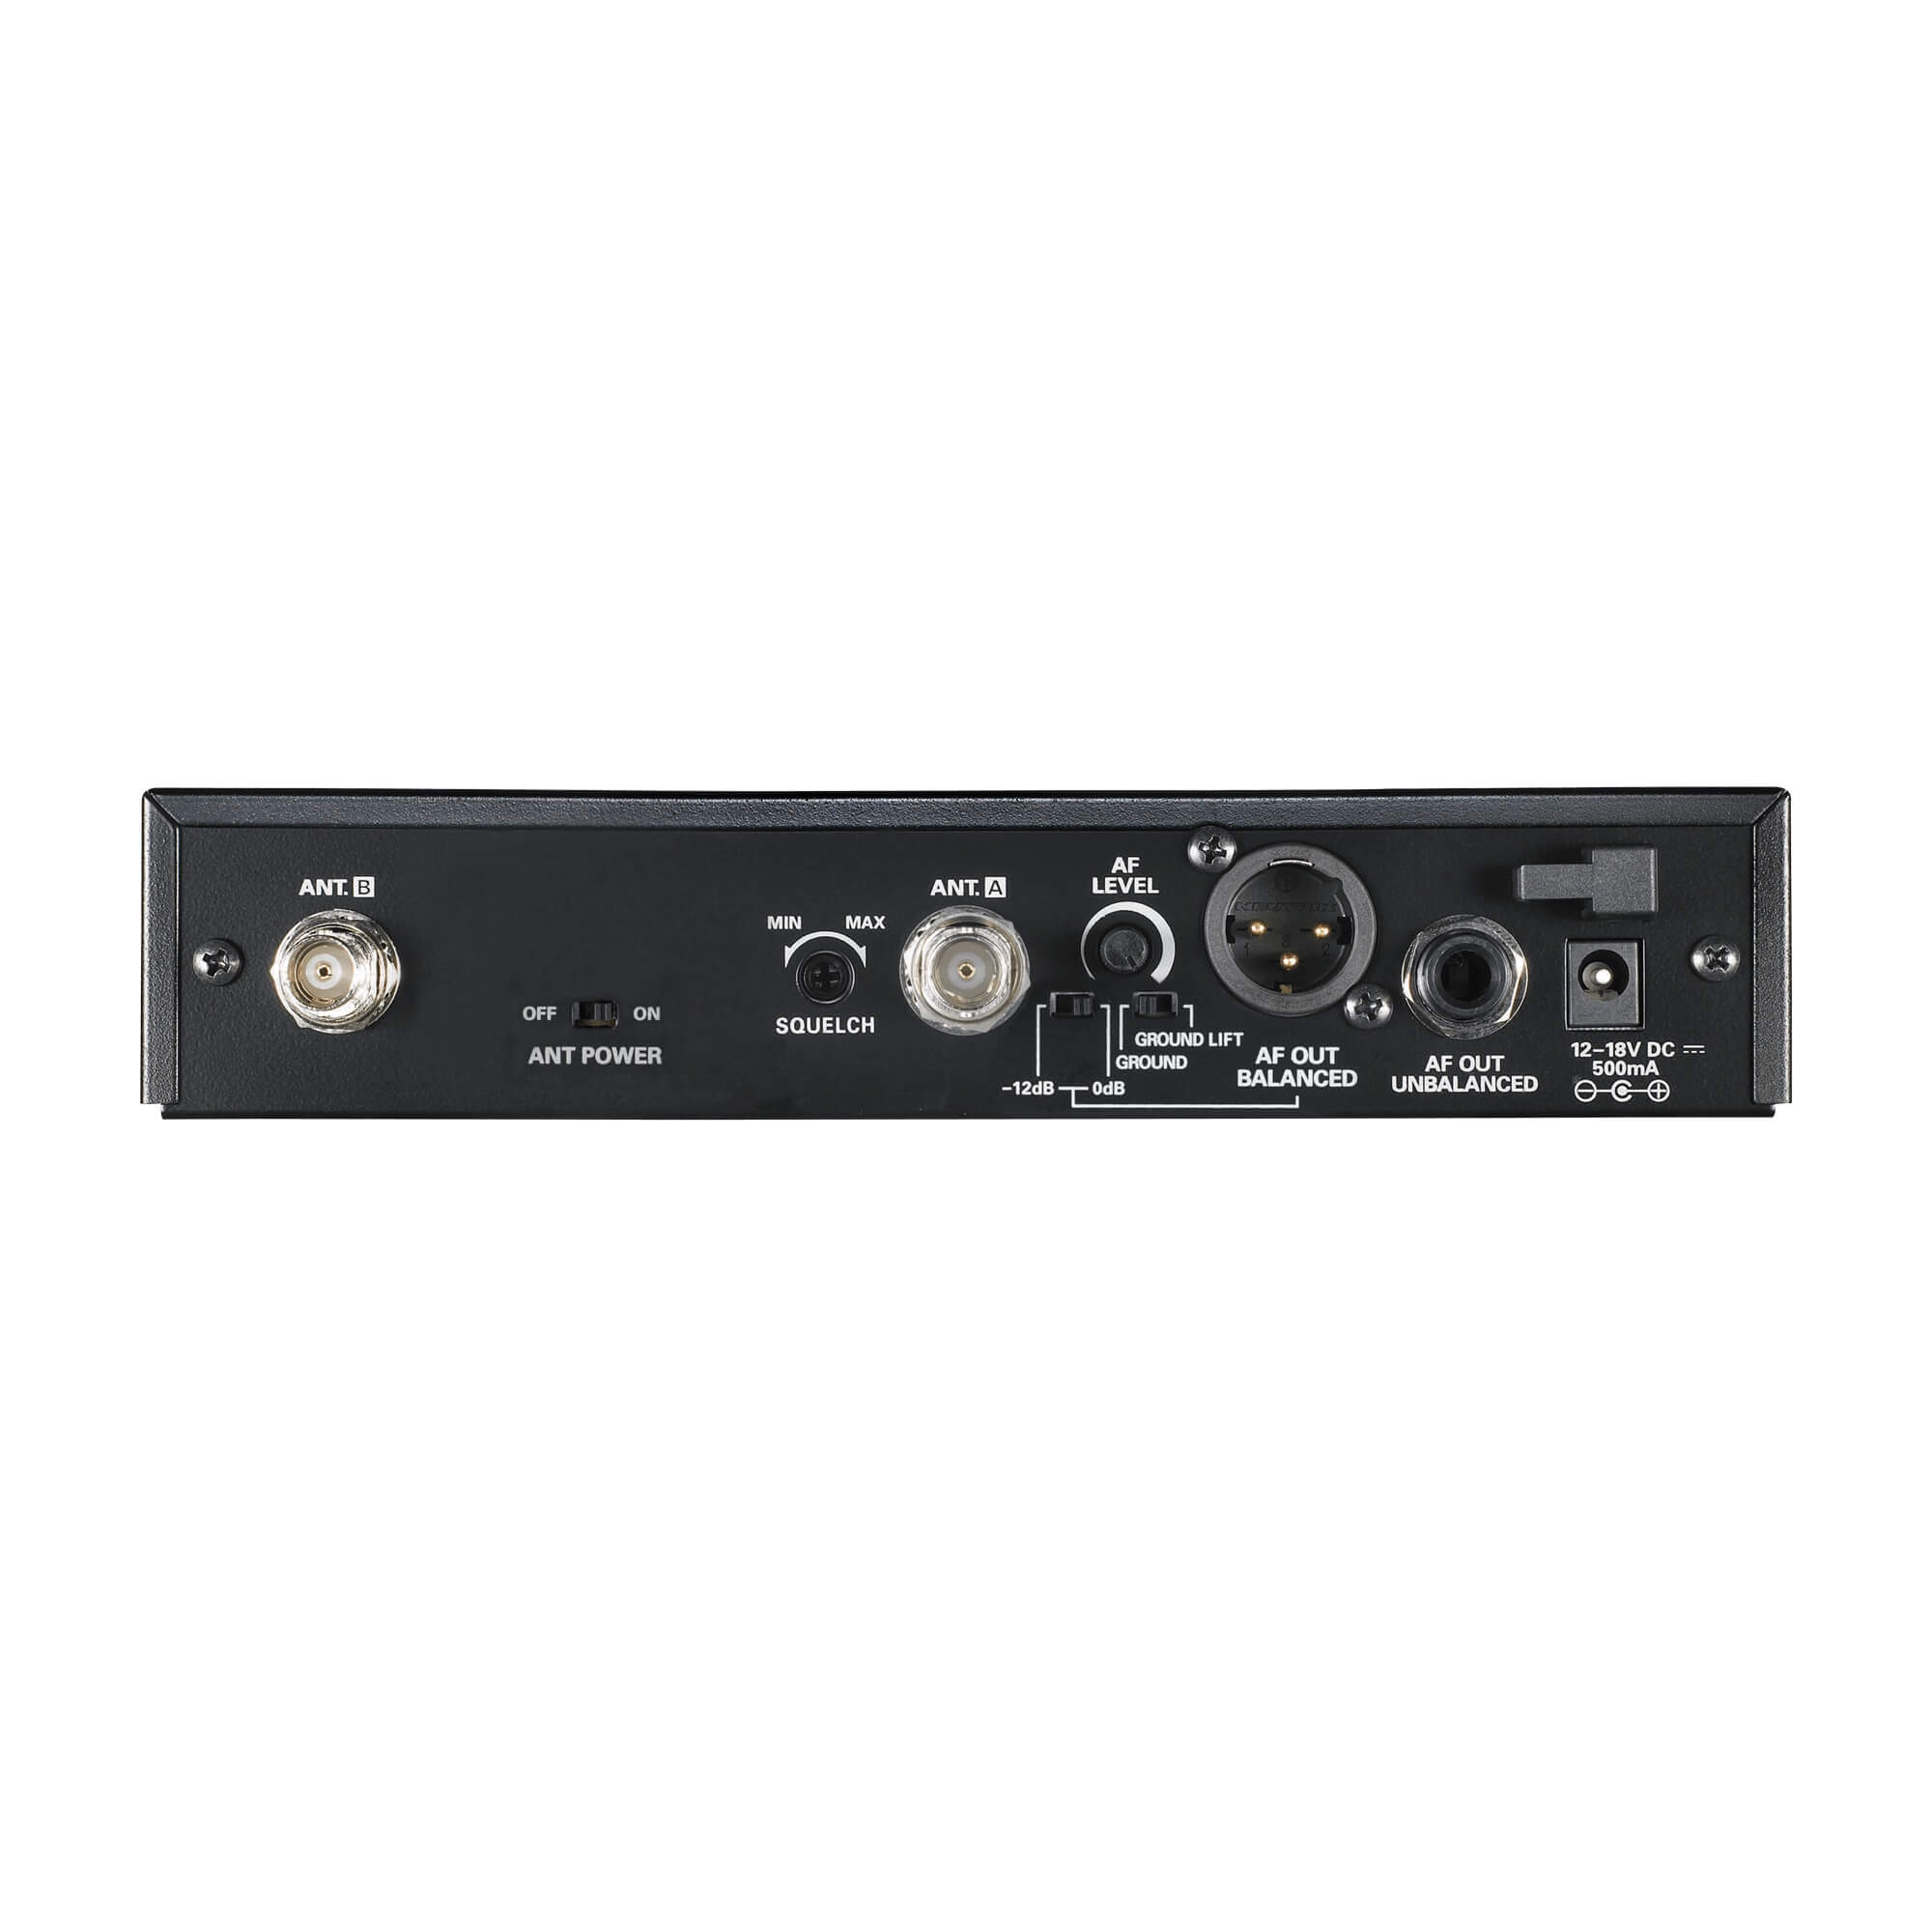 Audio-Technica ATW-R2100b receiver, rear